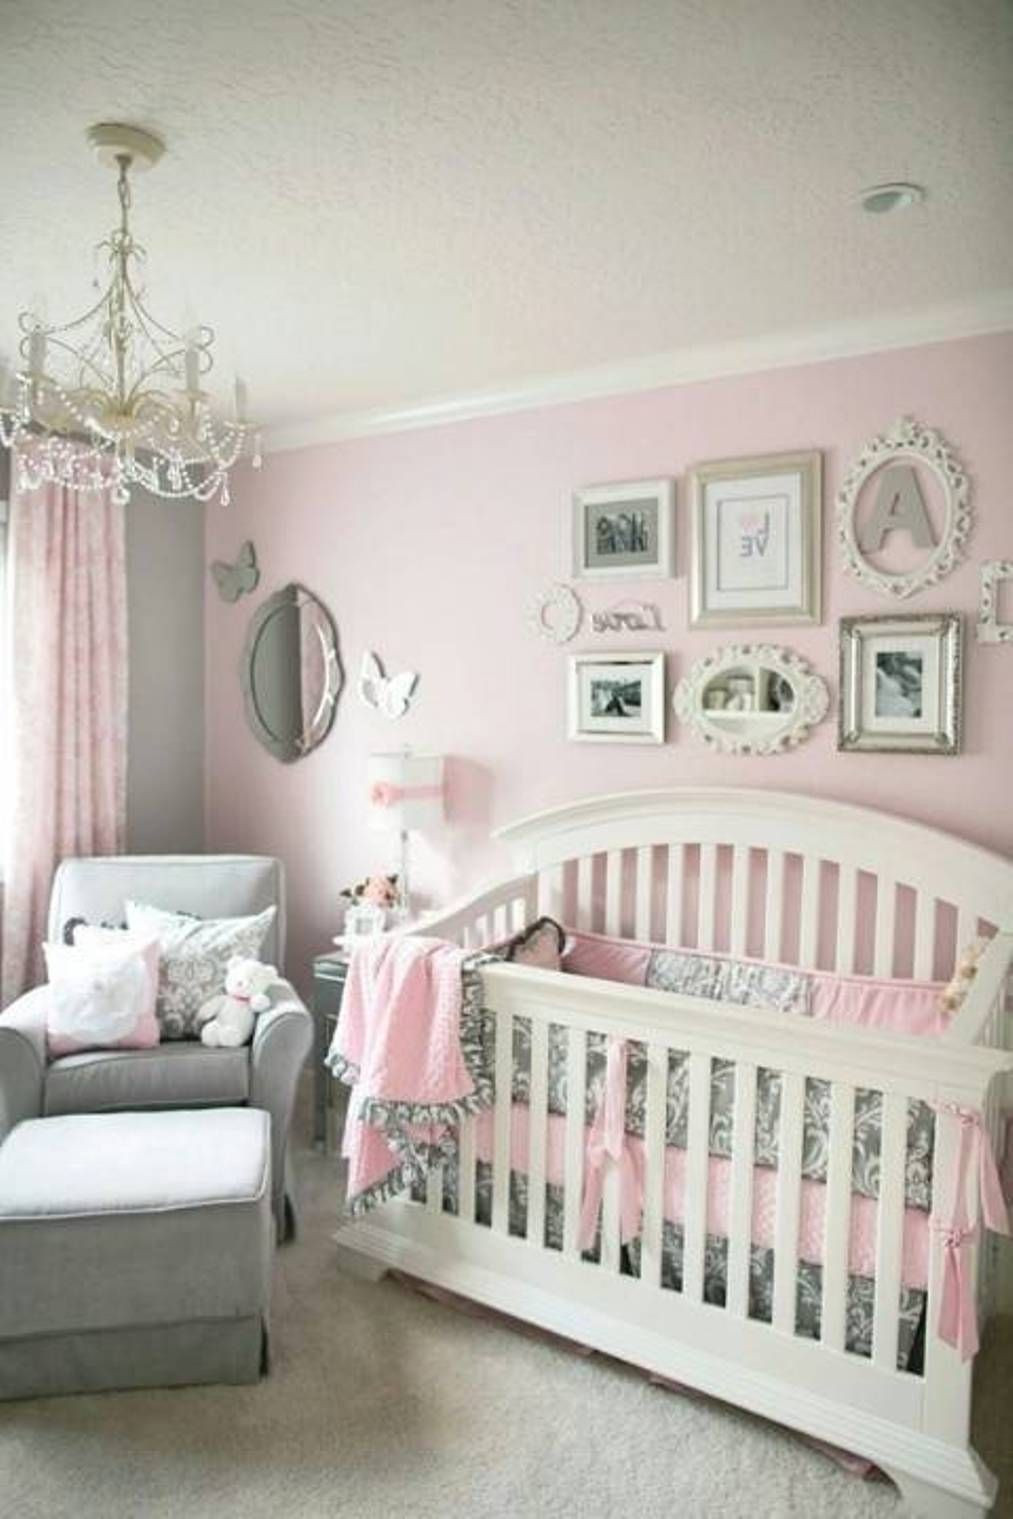 D.I.Y Baby Girl Room Decorations
 Toddler Girl Bedroom